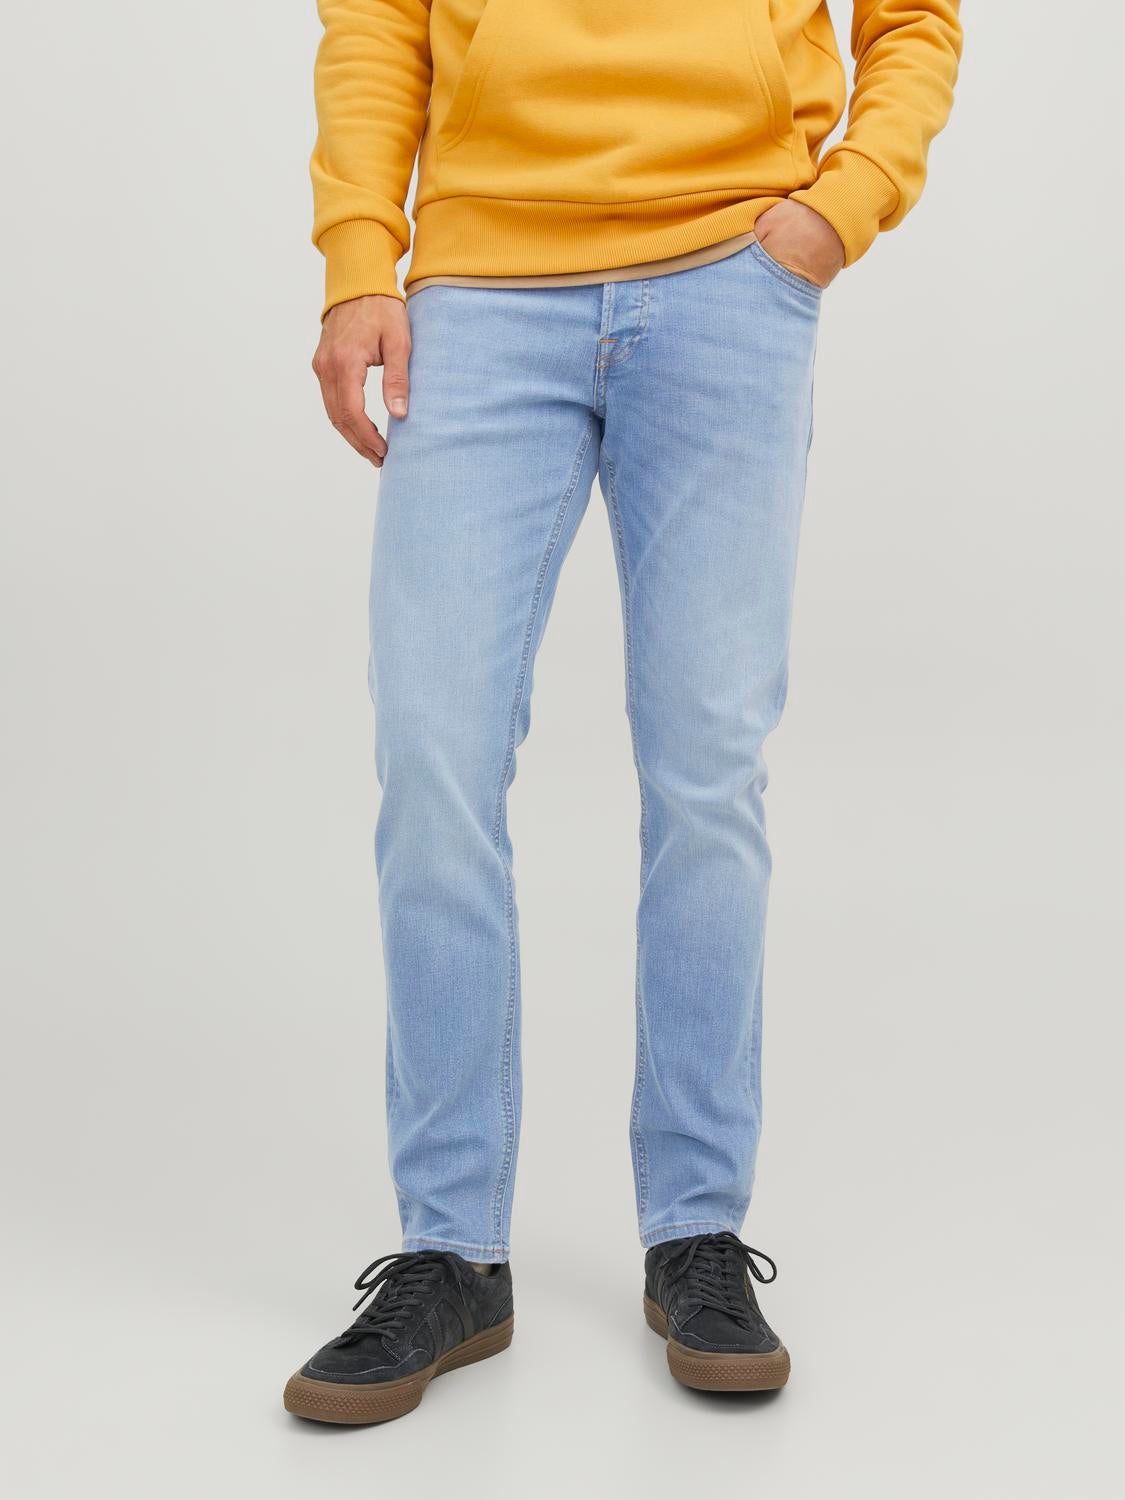 Premium Yerbant Blue Men Knitted Denim Slim Fit Jeans, Waist Size: 30 - 36  at Rs 575/piece in Bengaluru